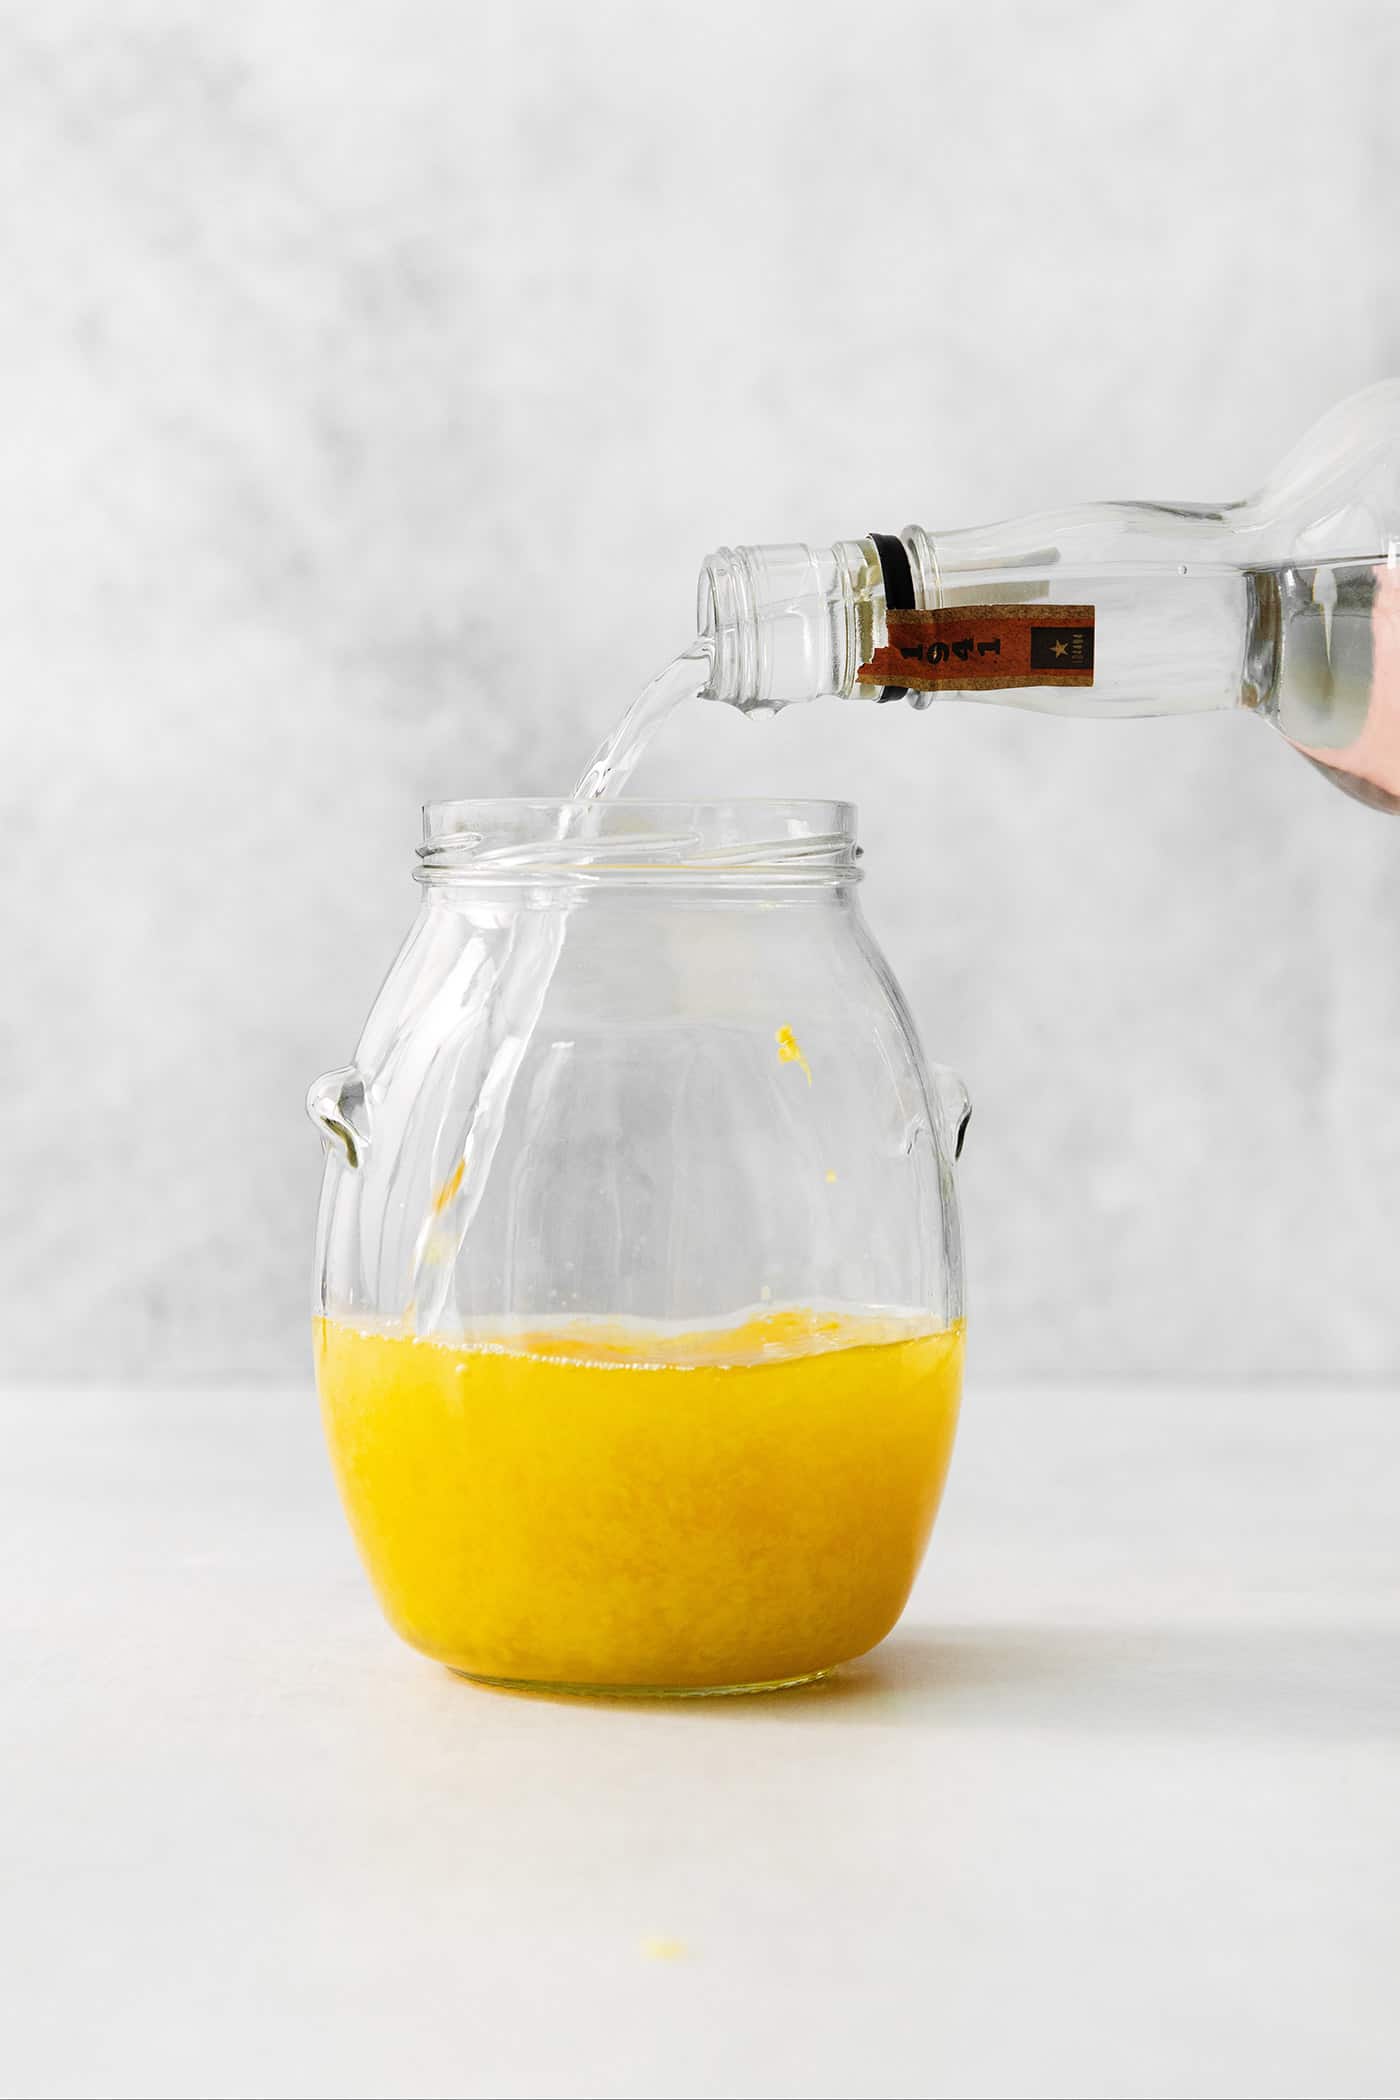 Vodka is poured into a jar of lemon zest to make limoncello.